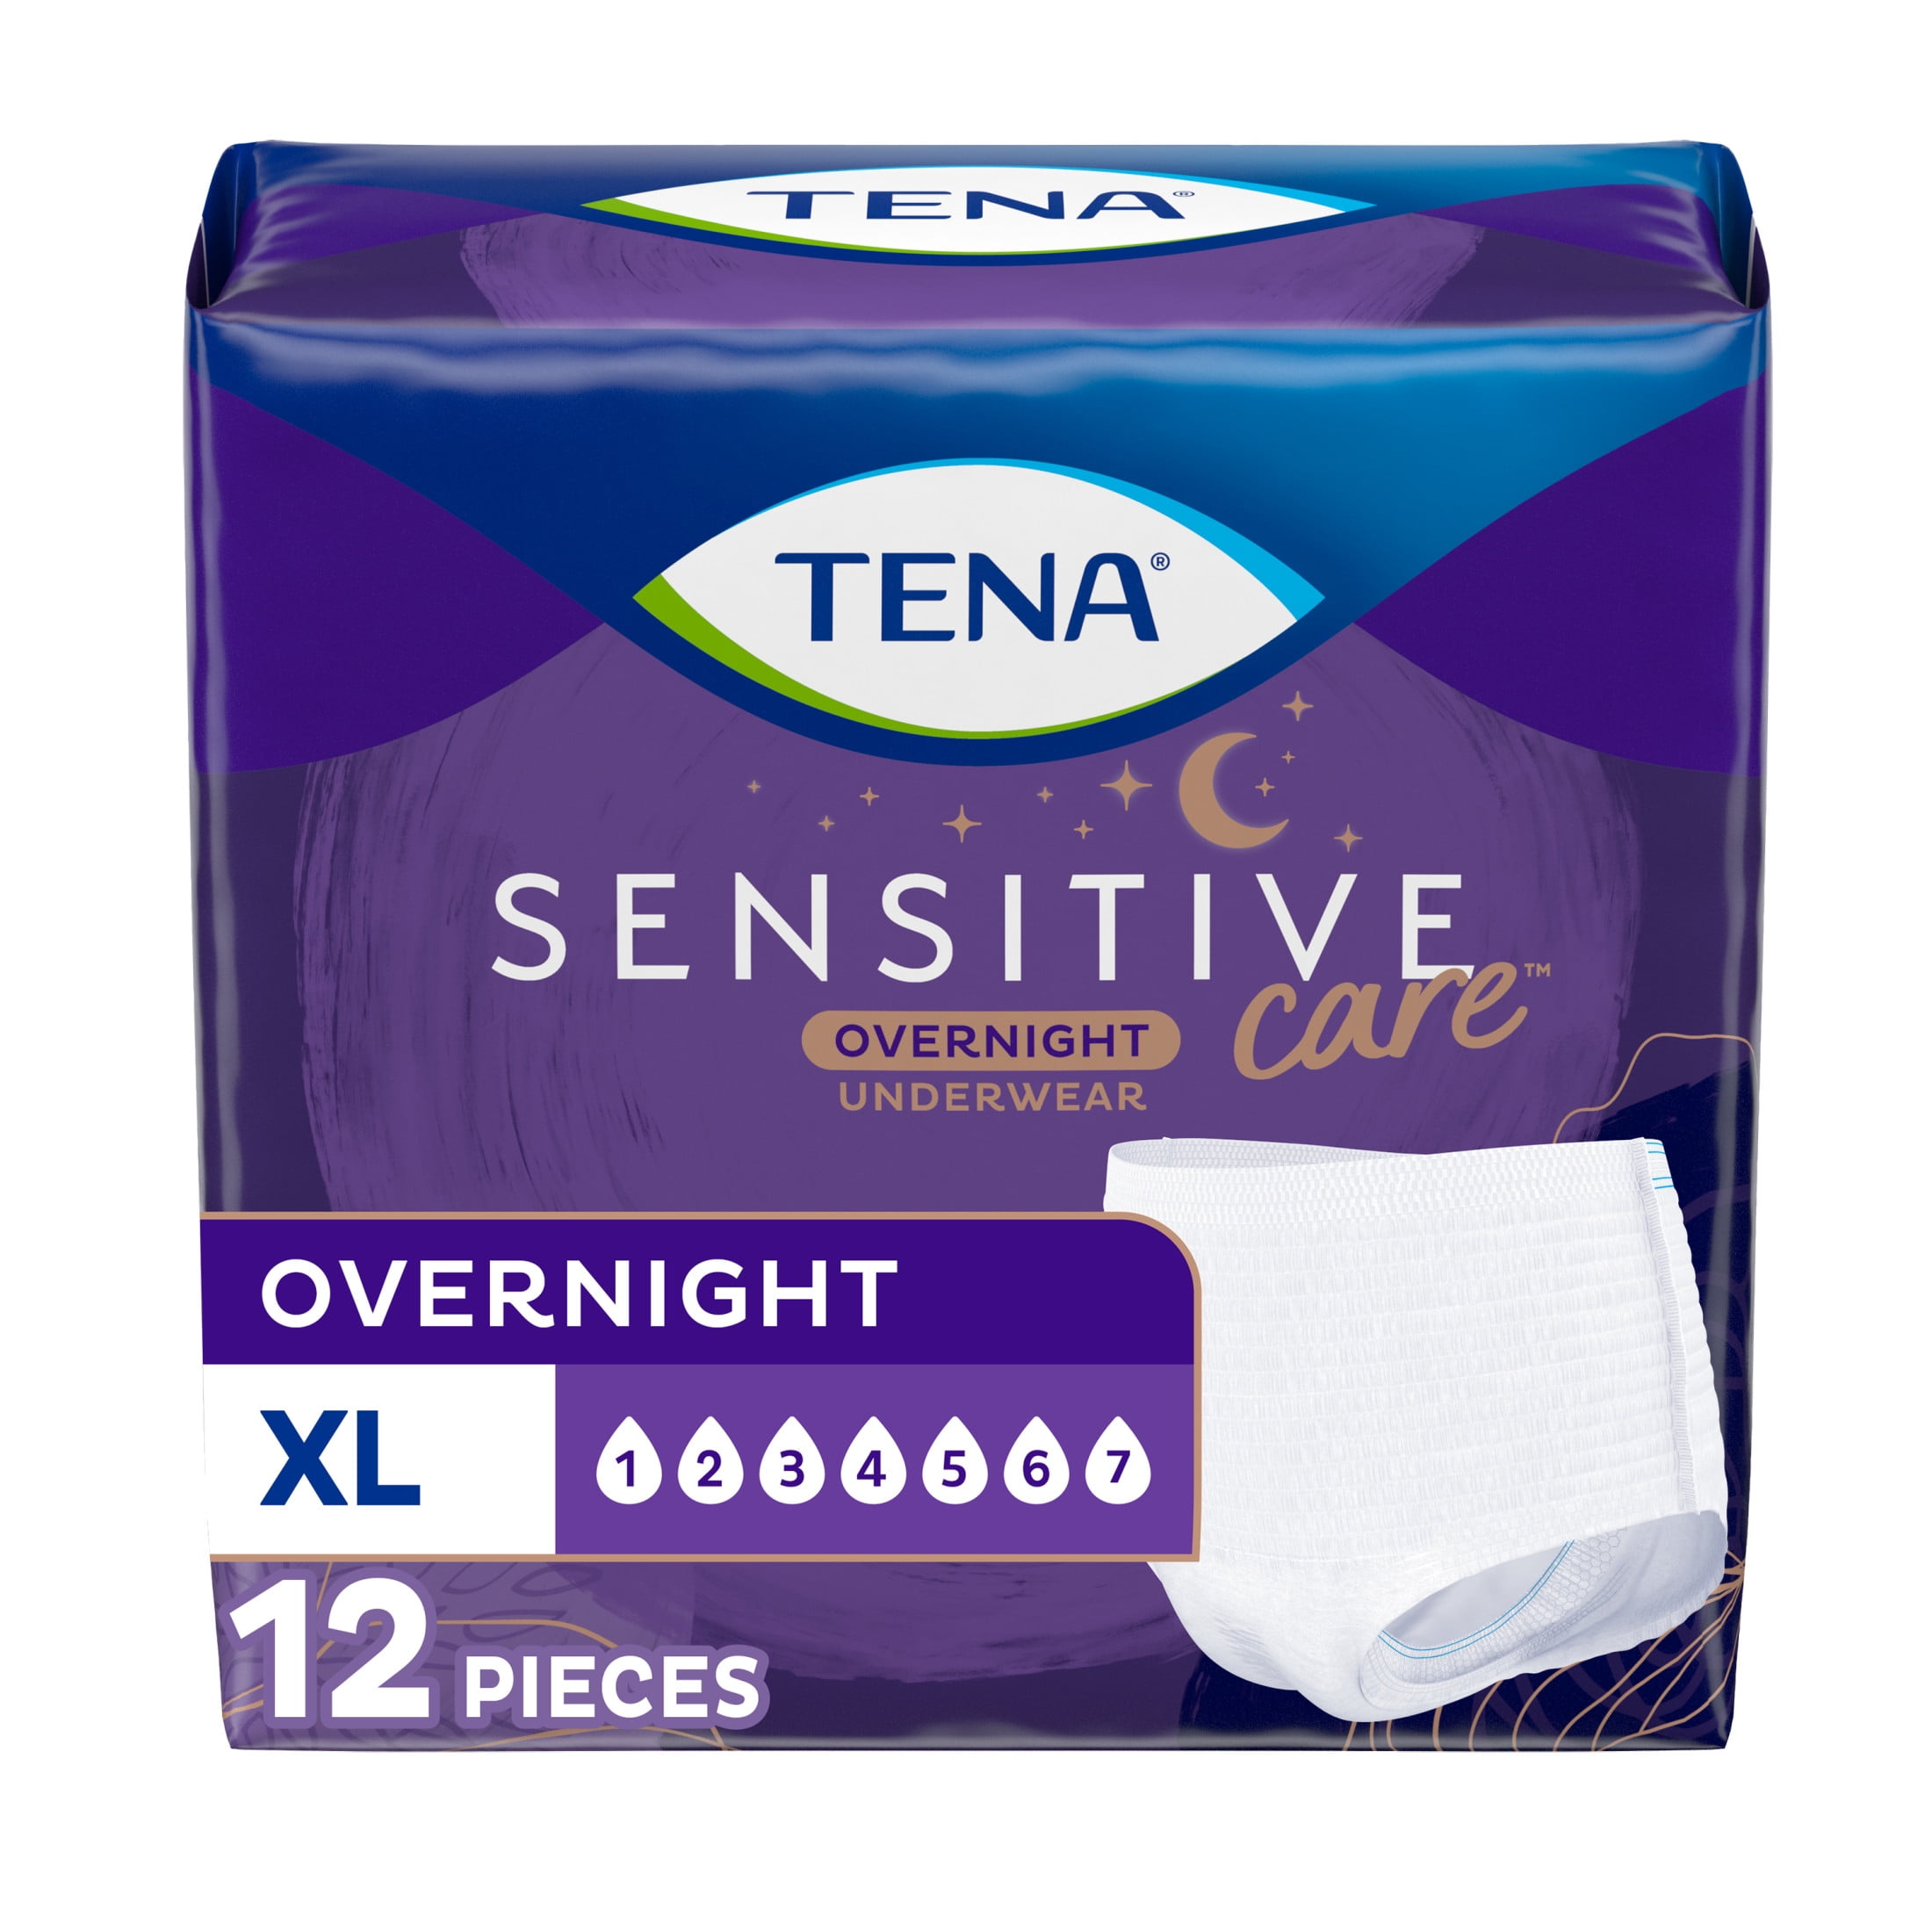 TENA Stylish Designs Underwear XL 28ct. : : Health & Personal Care